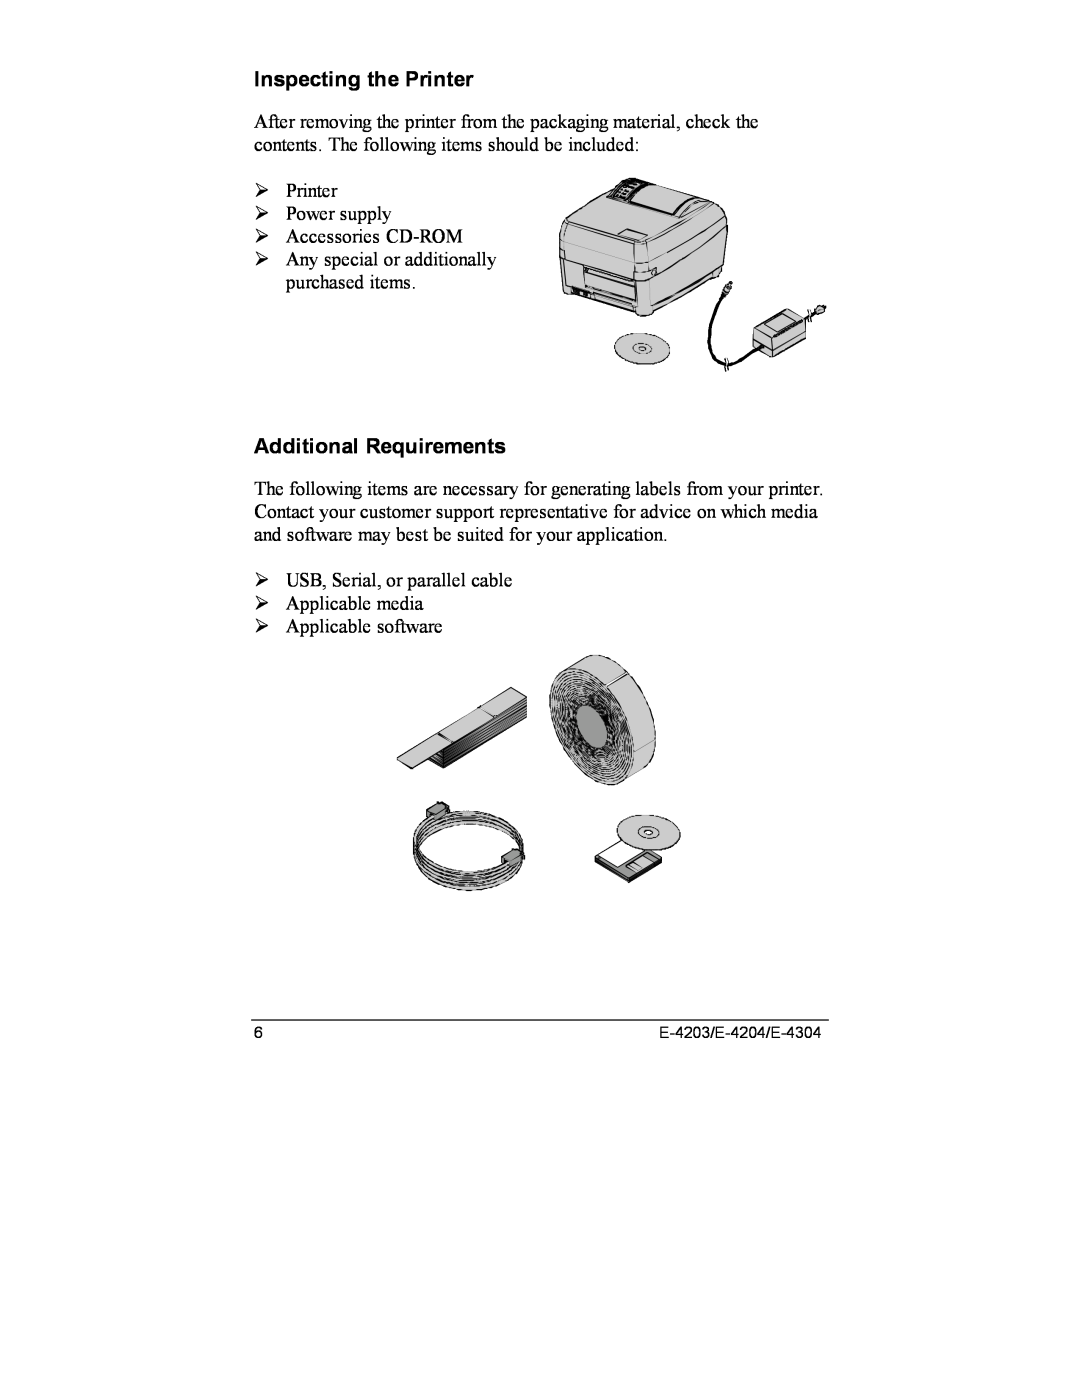 Datamax E-4204, E-4203, E-4304e manual Inspecting the Printer, Additional Requirements 